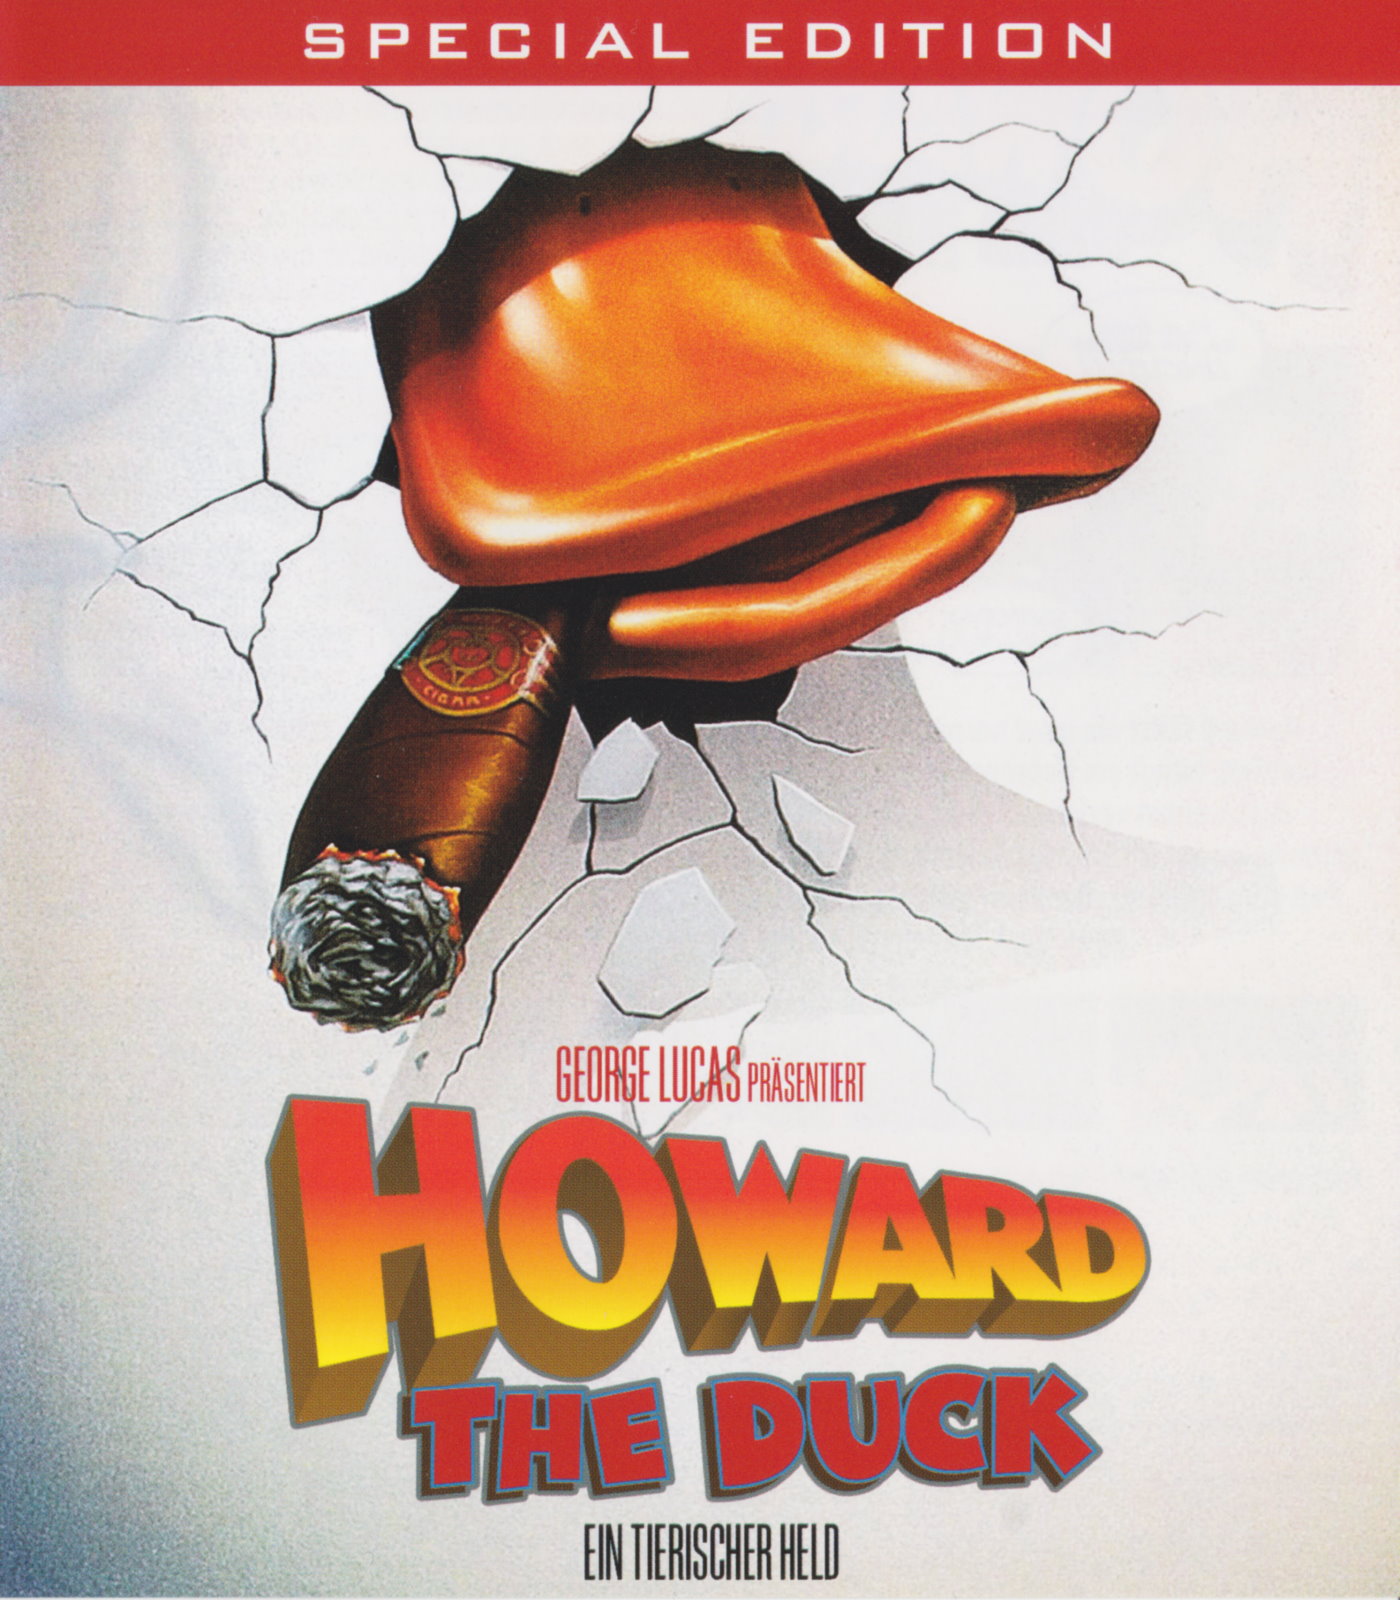 Cover - Howard The Duck - Ein tierischer Held.jpg